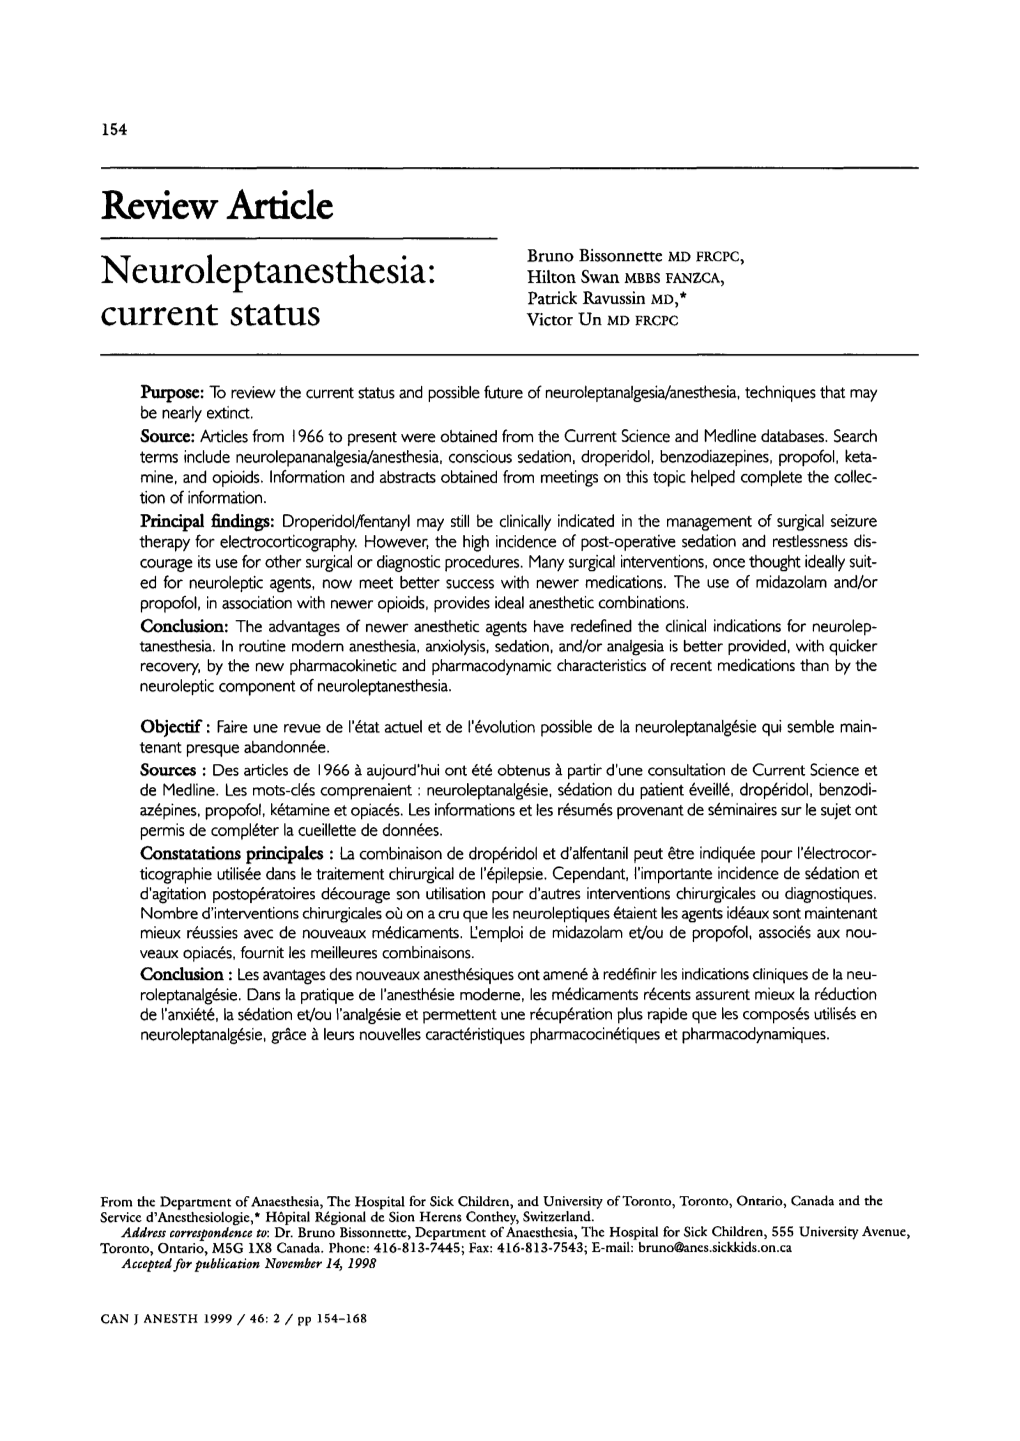 Neuroleptanesthesia: Current Status